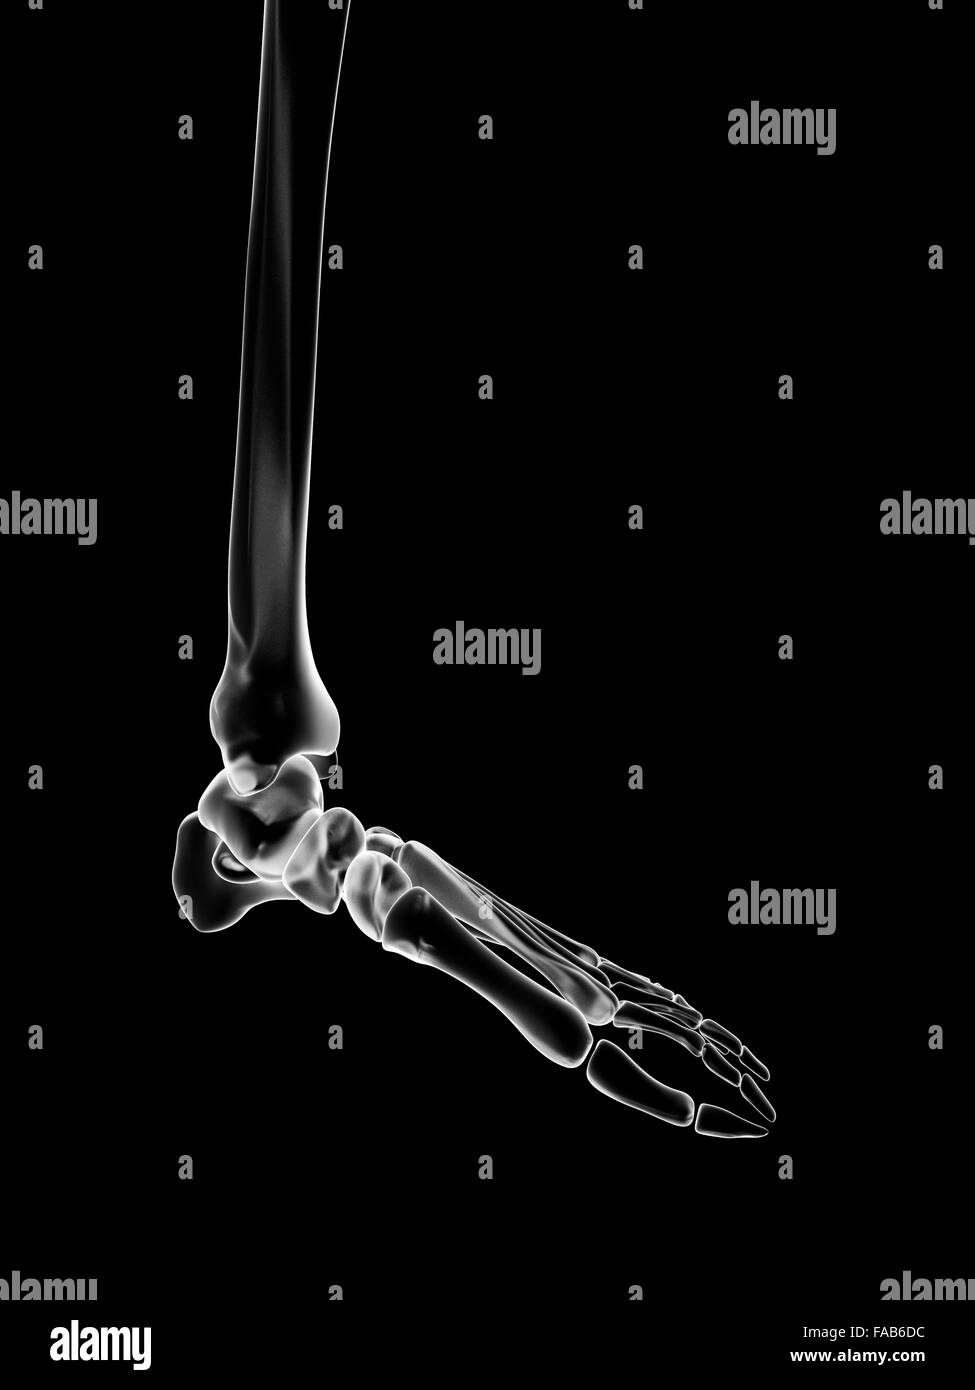 Human foot bones, computer illustration. Stock Photo